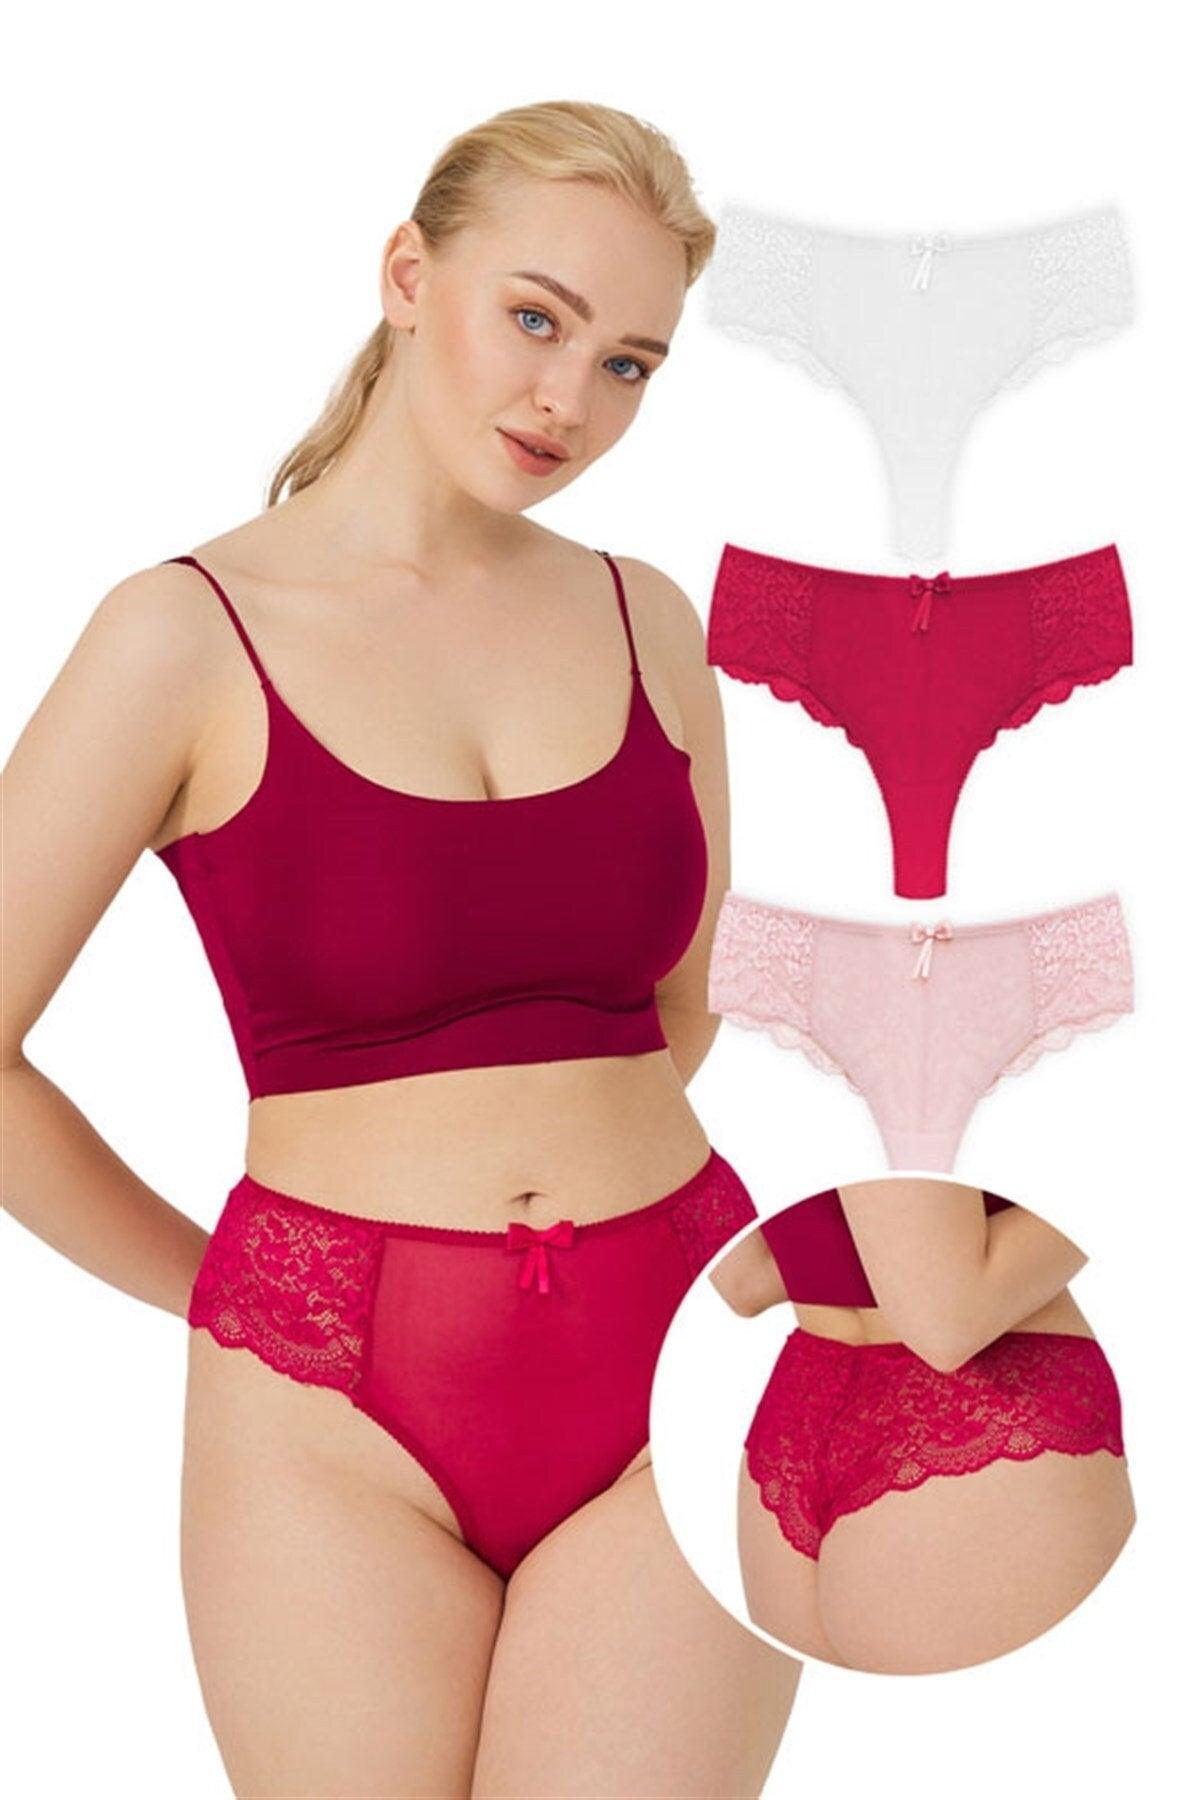 Lace Tulle Detailed Plus Size Women's Brazilian 3-Pack Panties - 2 - Swordslife